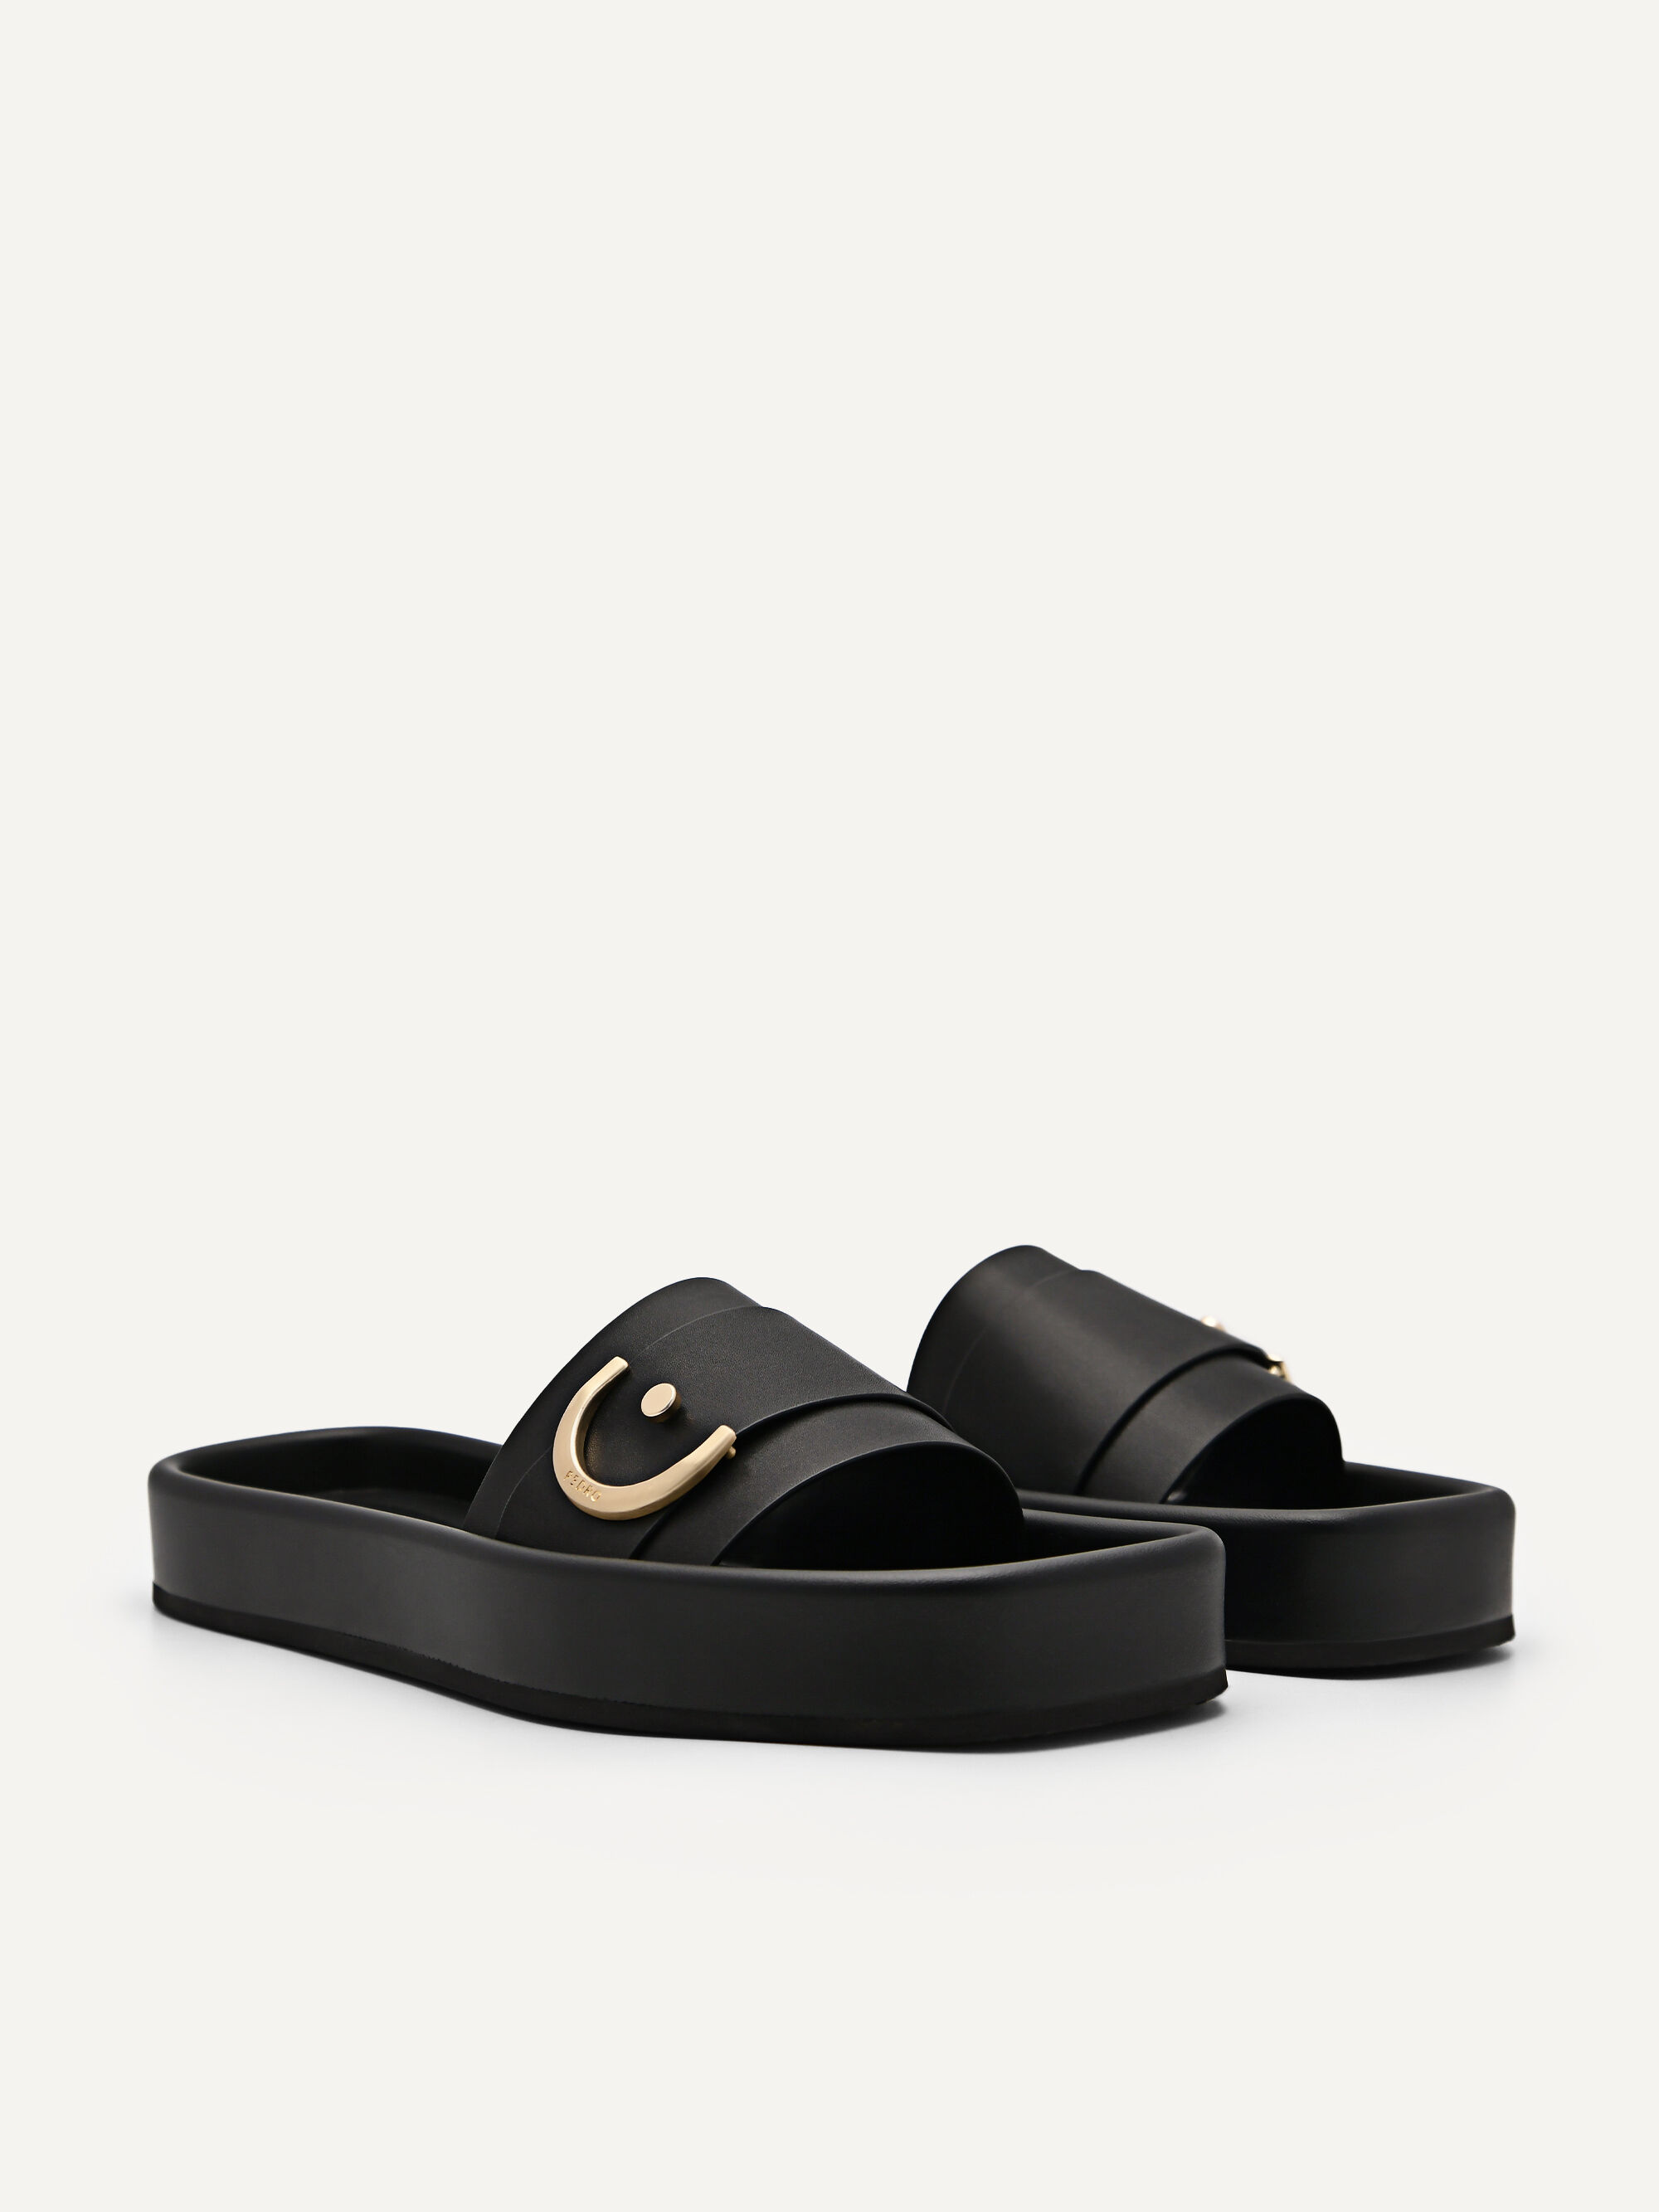 Yasmin Slip-On Sandals, Black